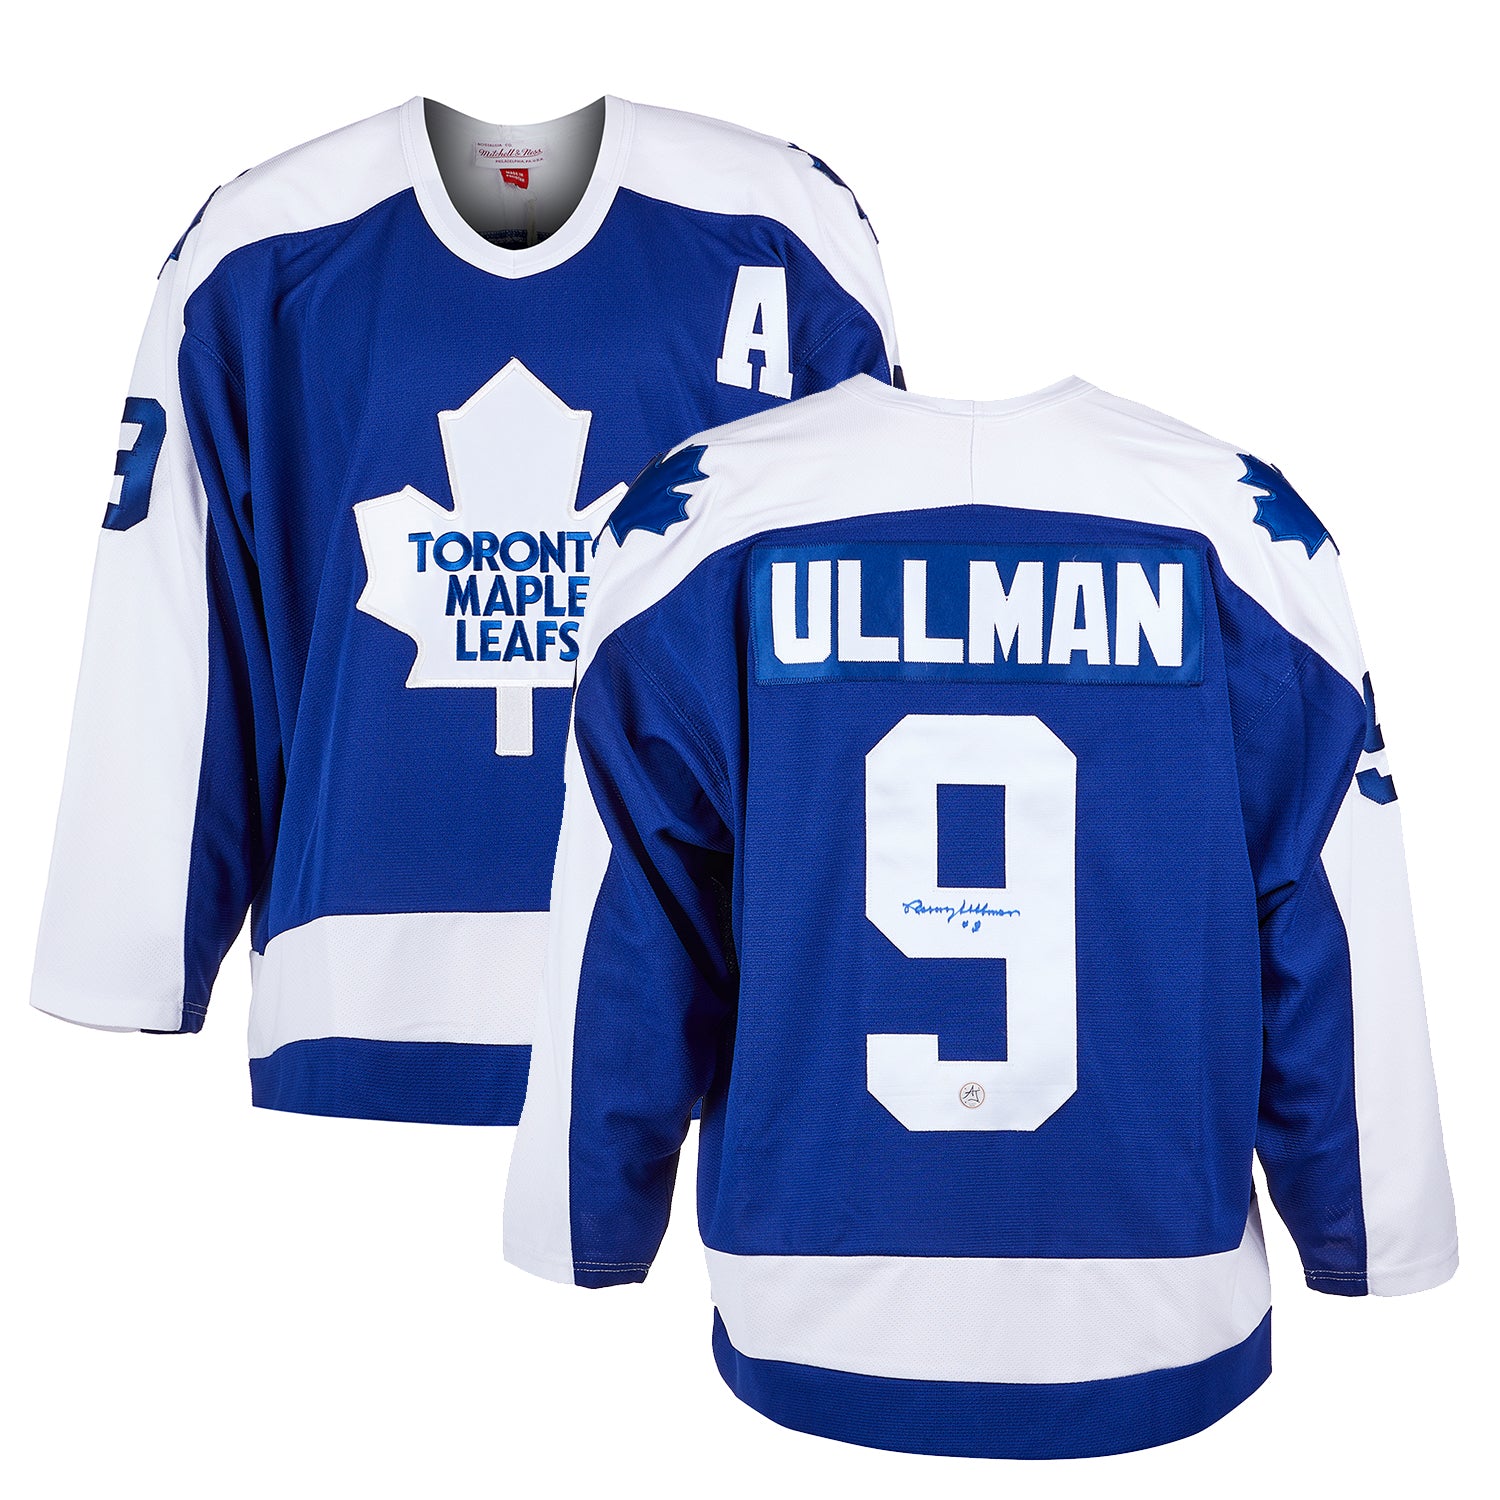 Norm Ullman Signed Toronto Maple Leafs Retro Mitchell & Ness Jersey